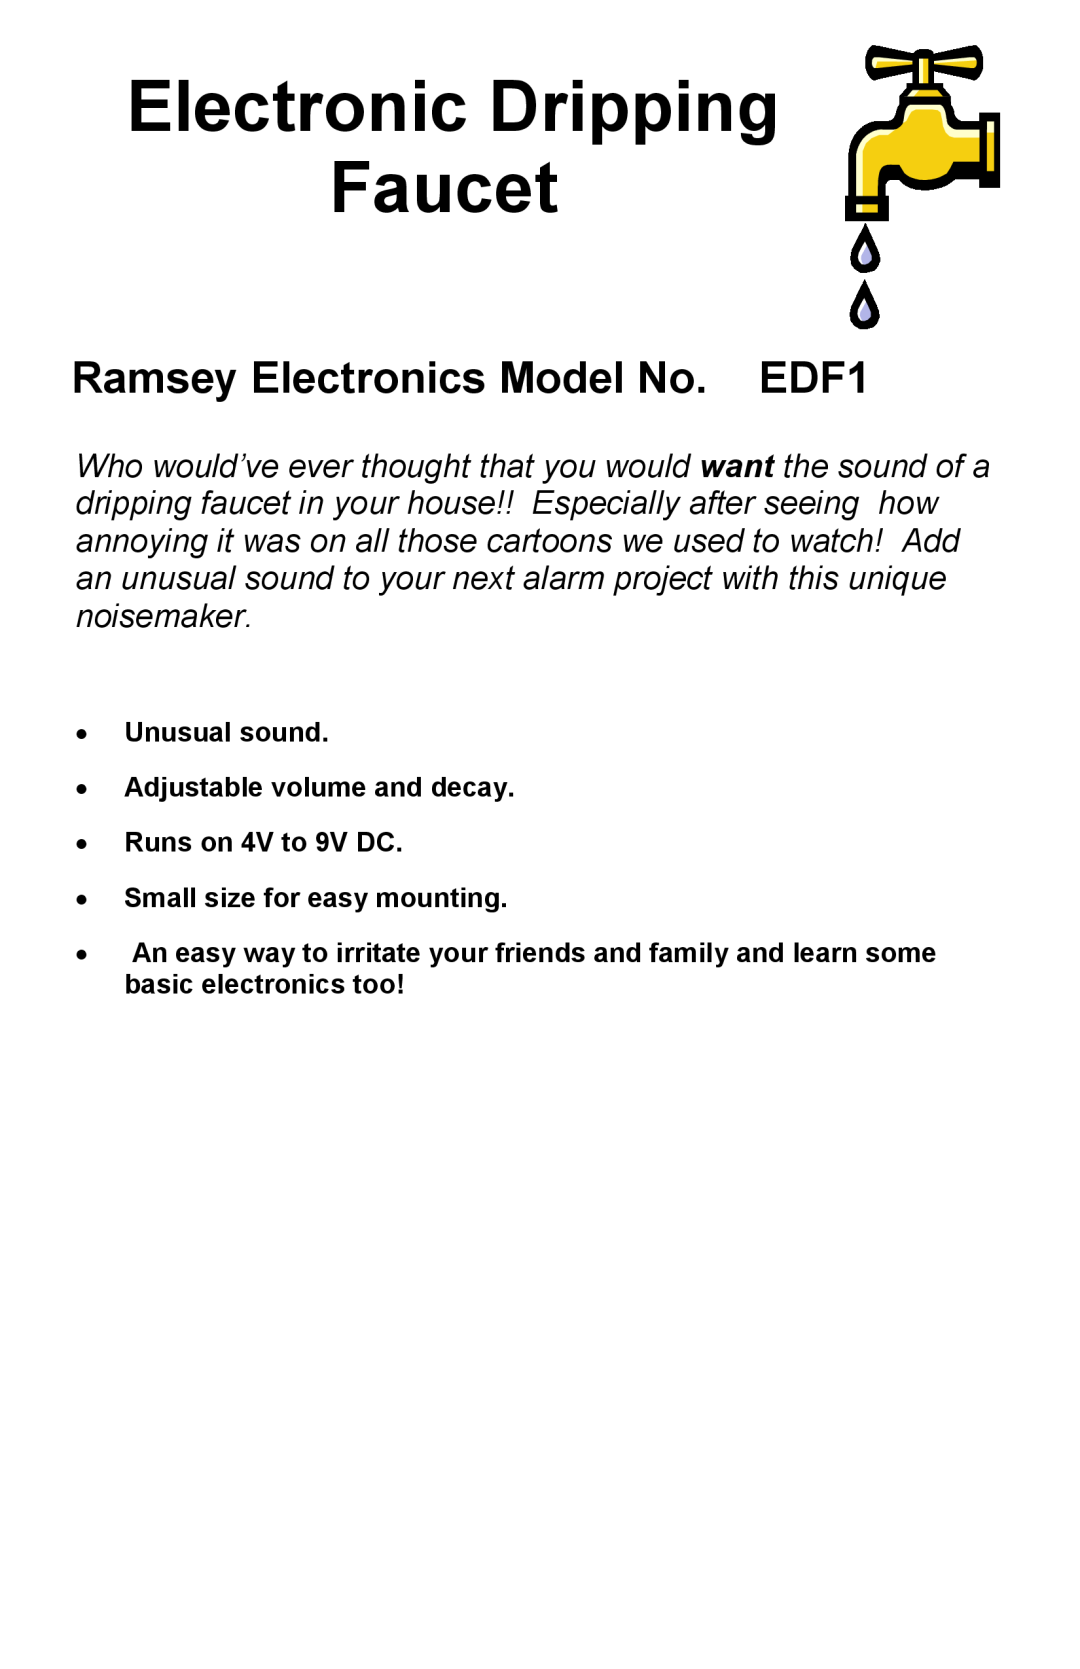 Ramsey Electronics Electronic Dripping Faucet manual Ramsey Electronics Model No. EDF1 